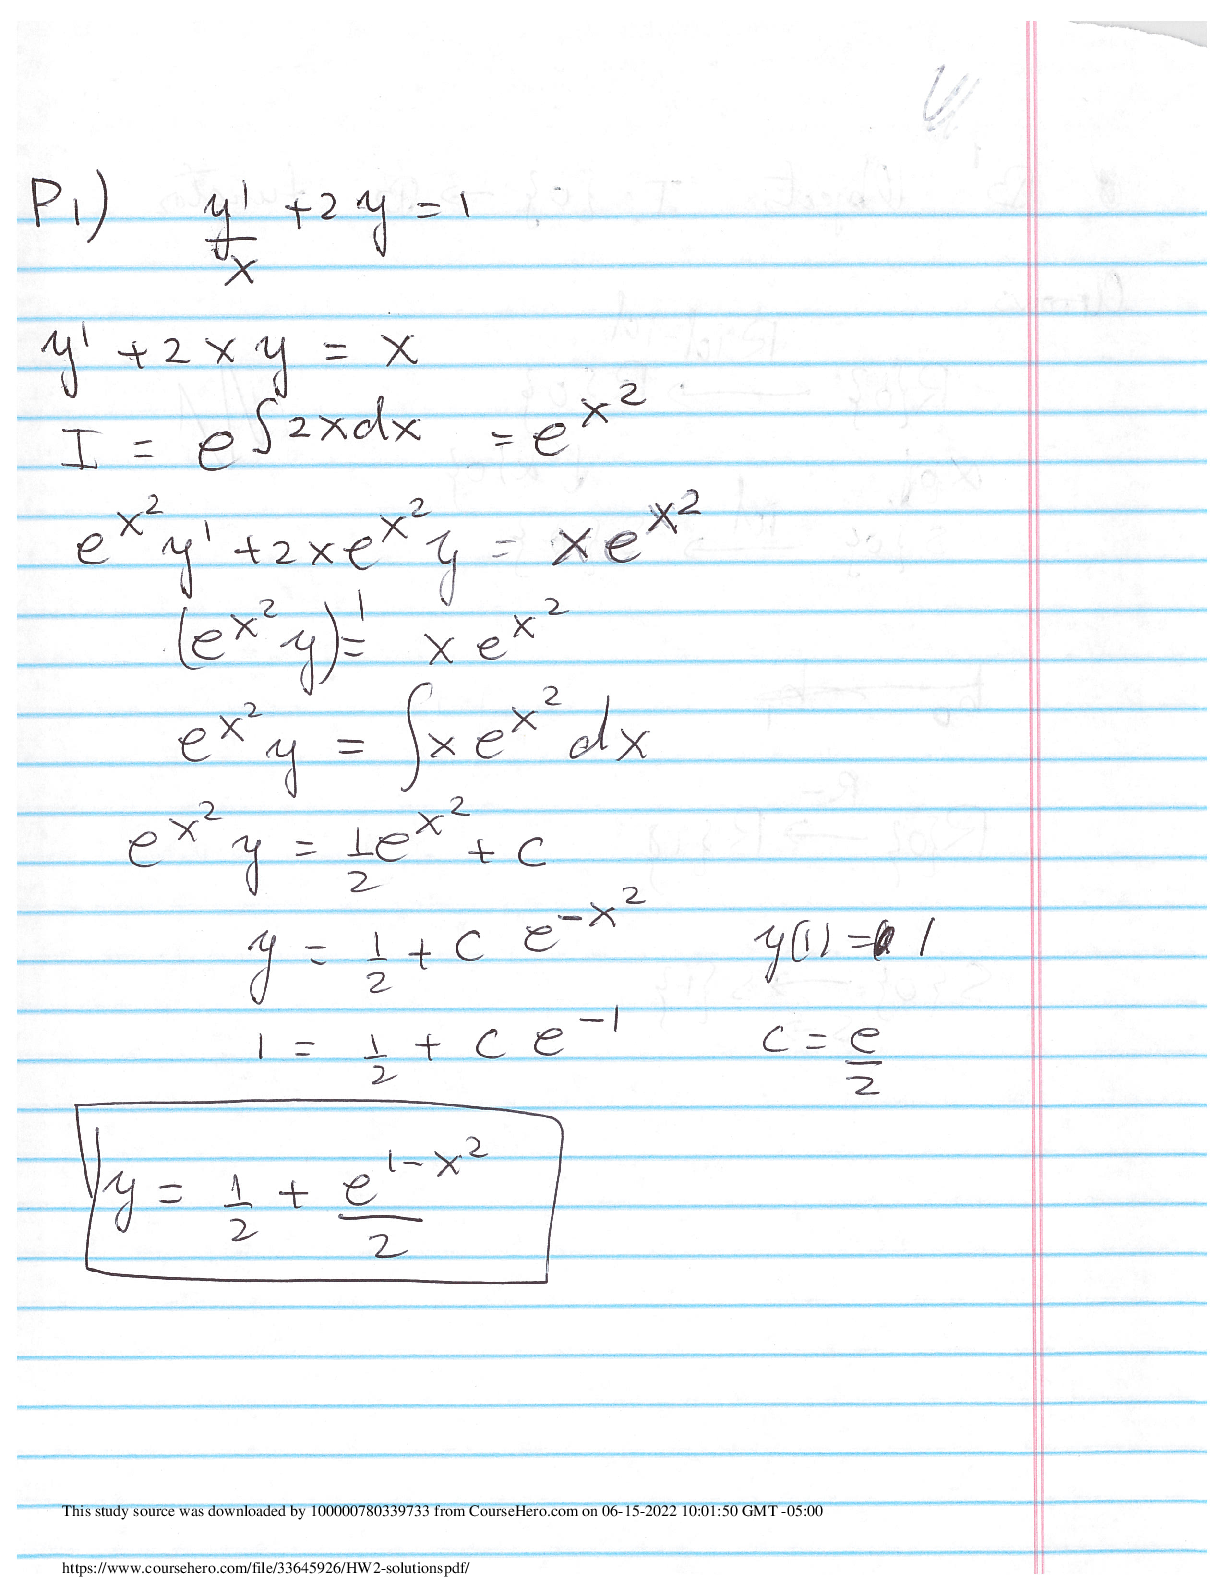 HW2 solutions calculus